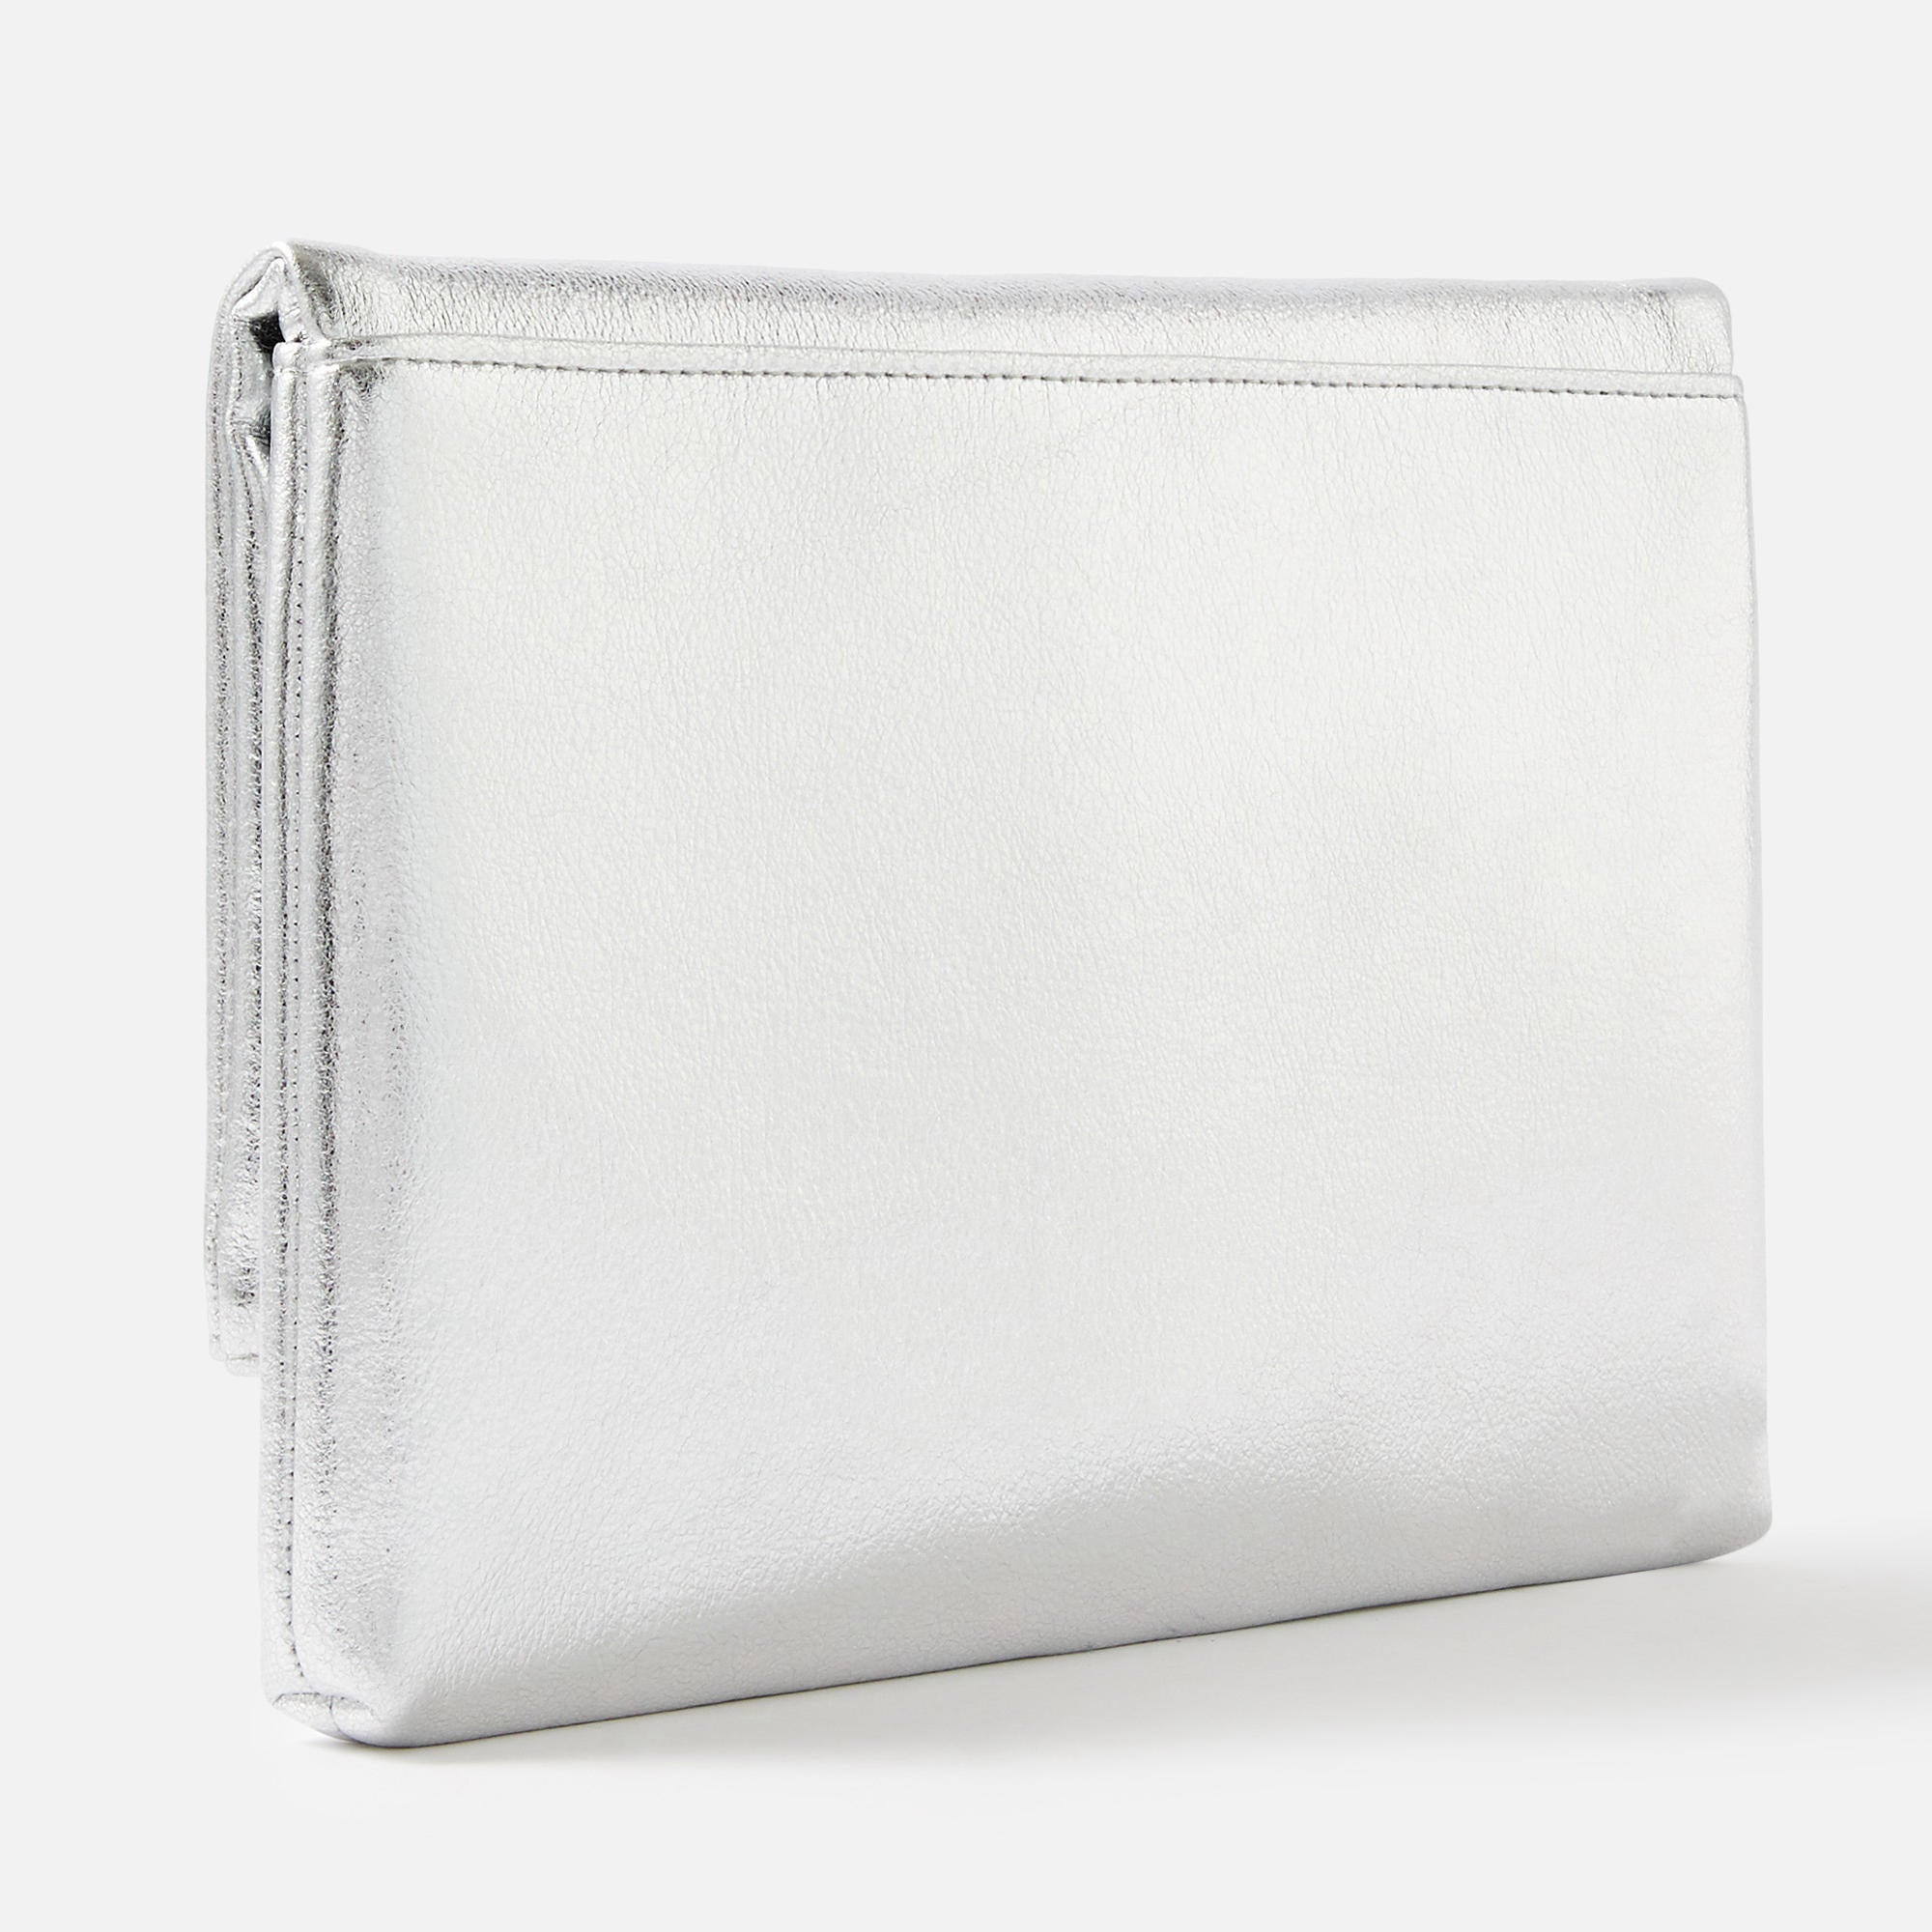 Accessorize London Women's Foldover Clutch Bag Silver